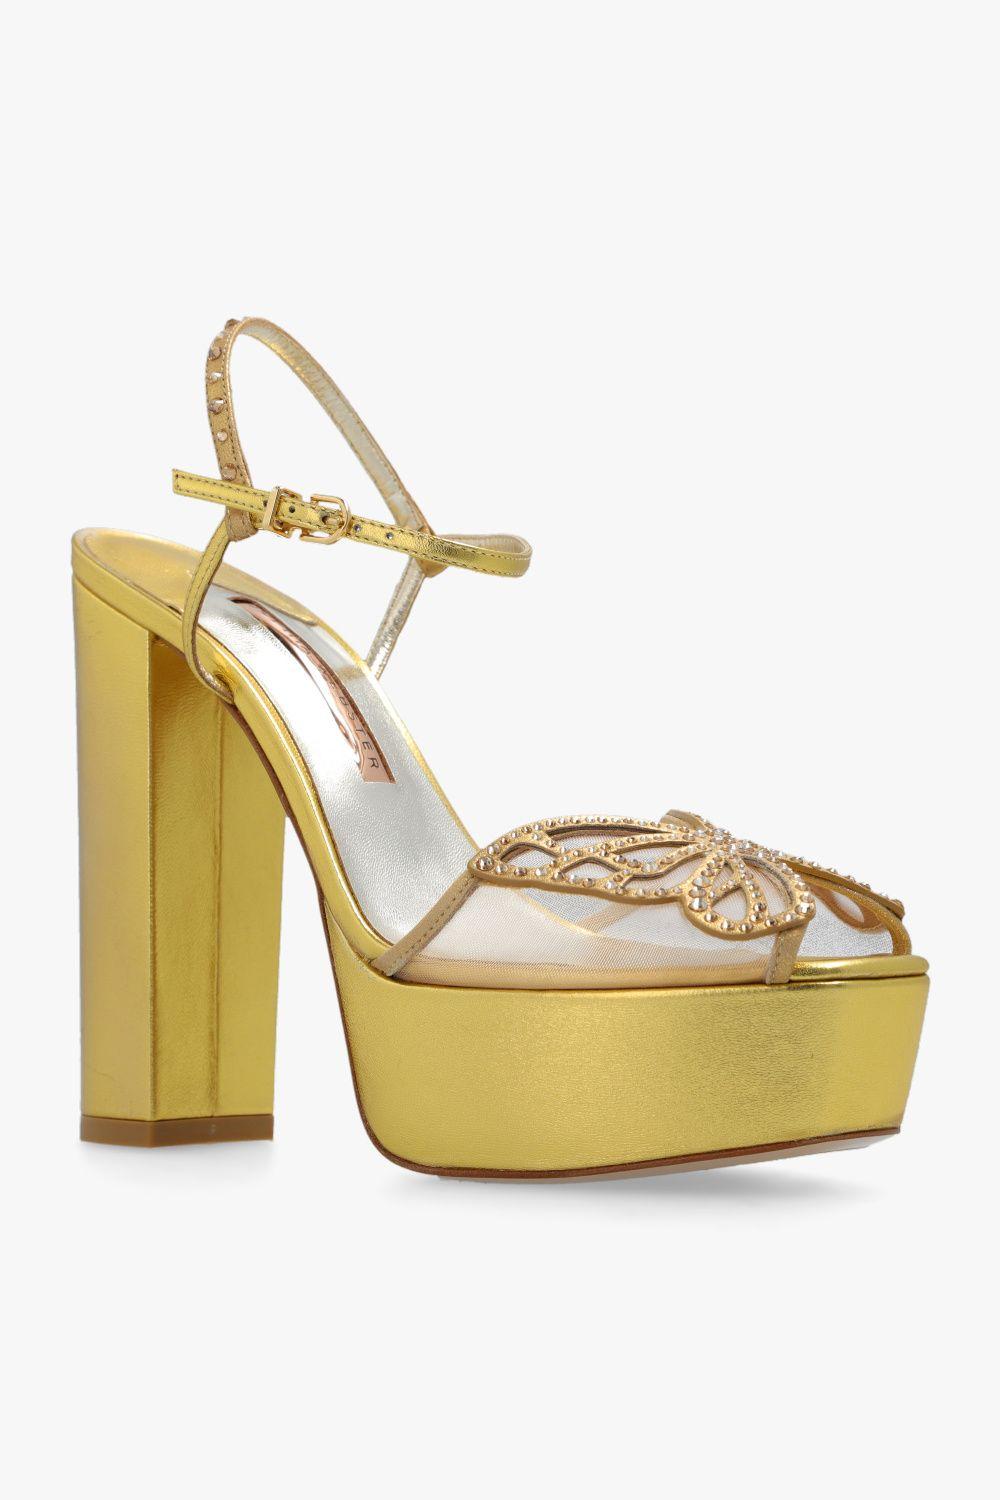 Sophia Webster 'farfalla' Platform Sandals in Metallic | Lyst